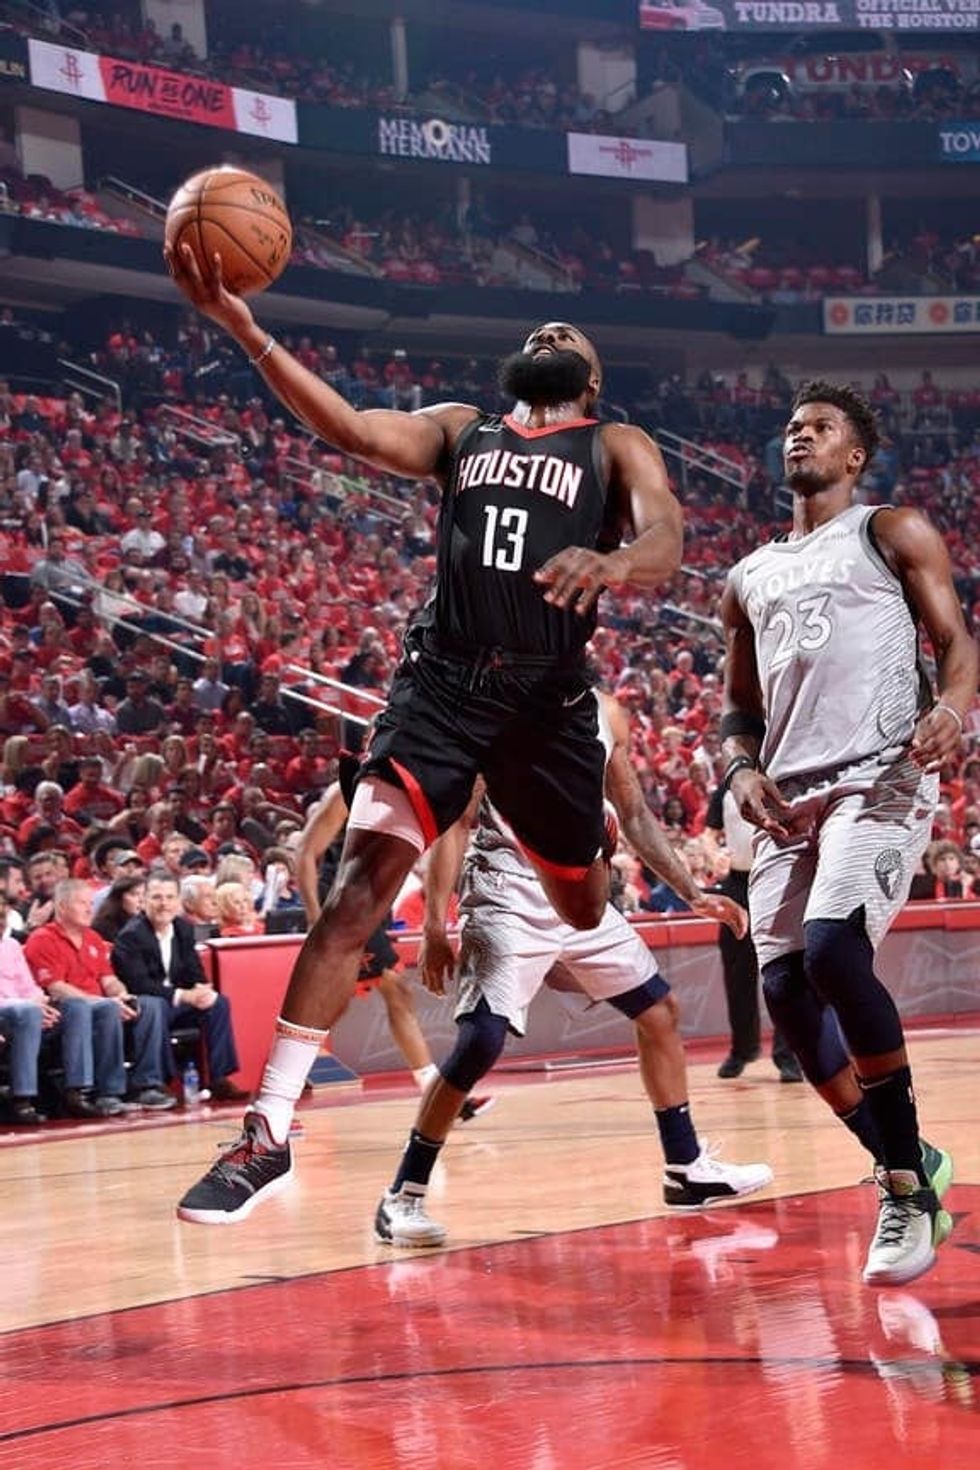 Rockets-Wolves Game 2 recap: Houston rolls 102-82 despite terrible night from Harden